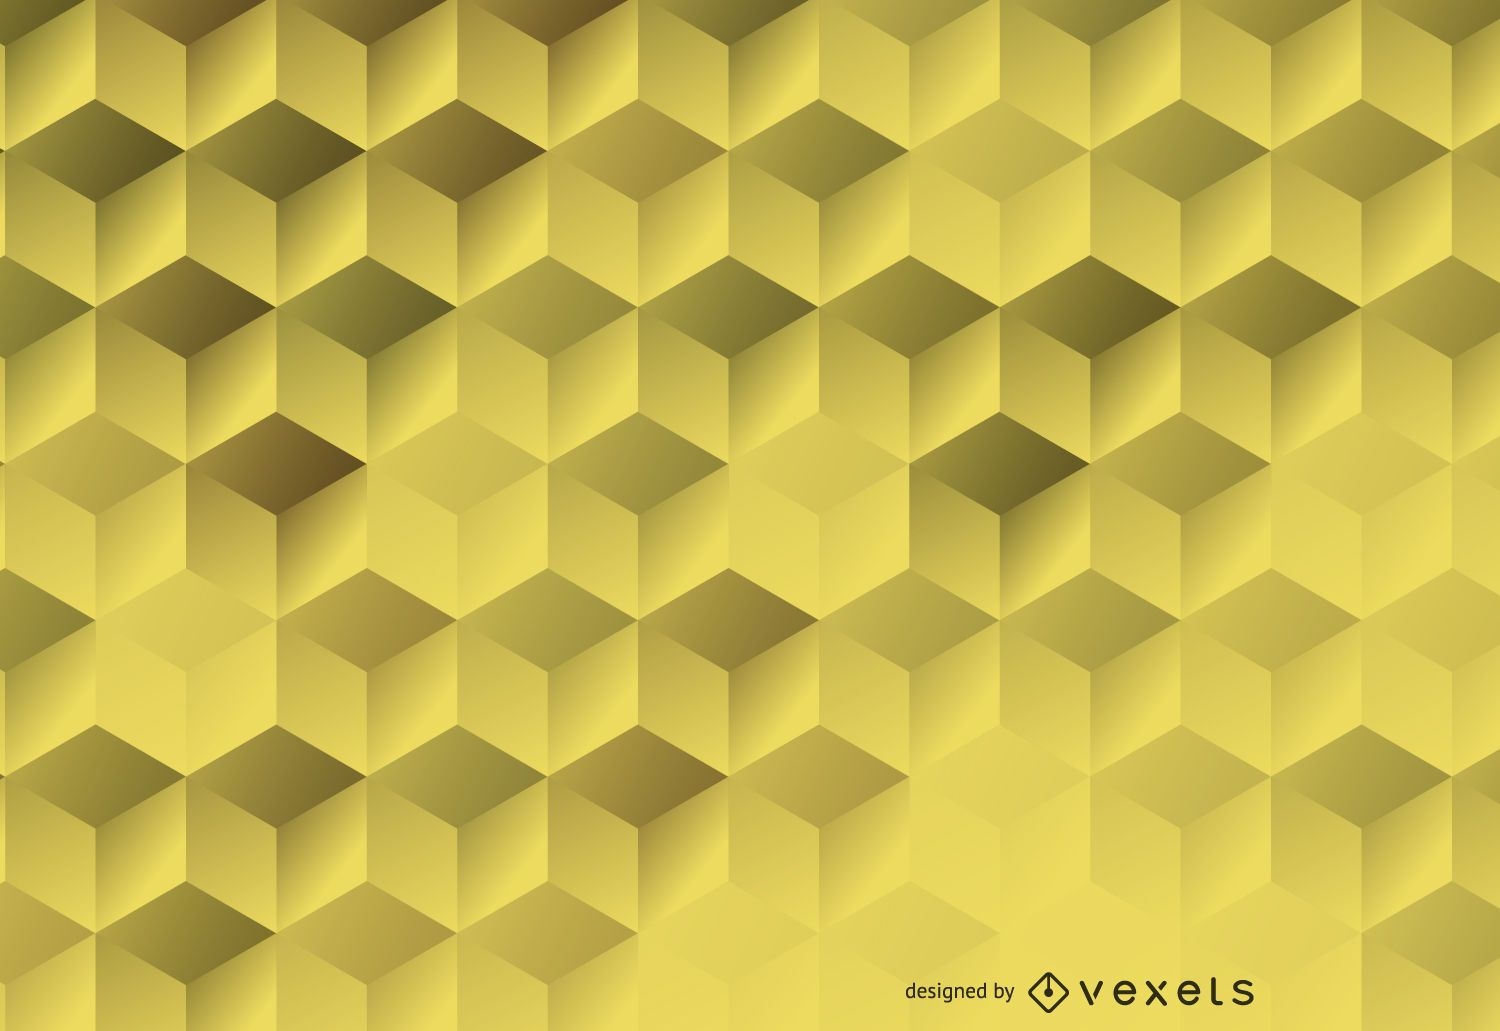 3D hexagonal backdrop